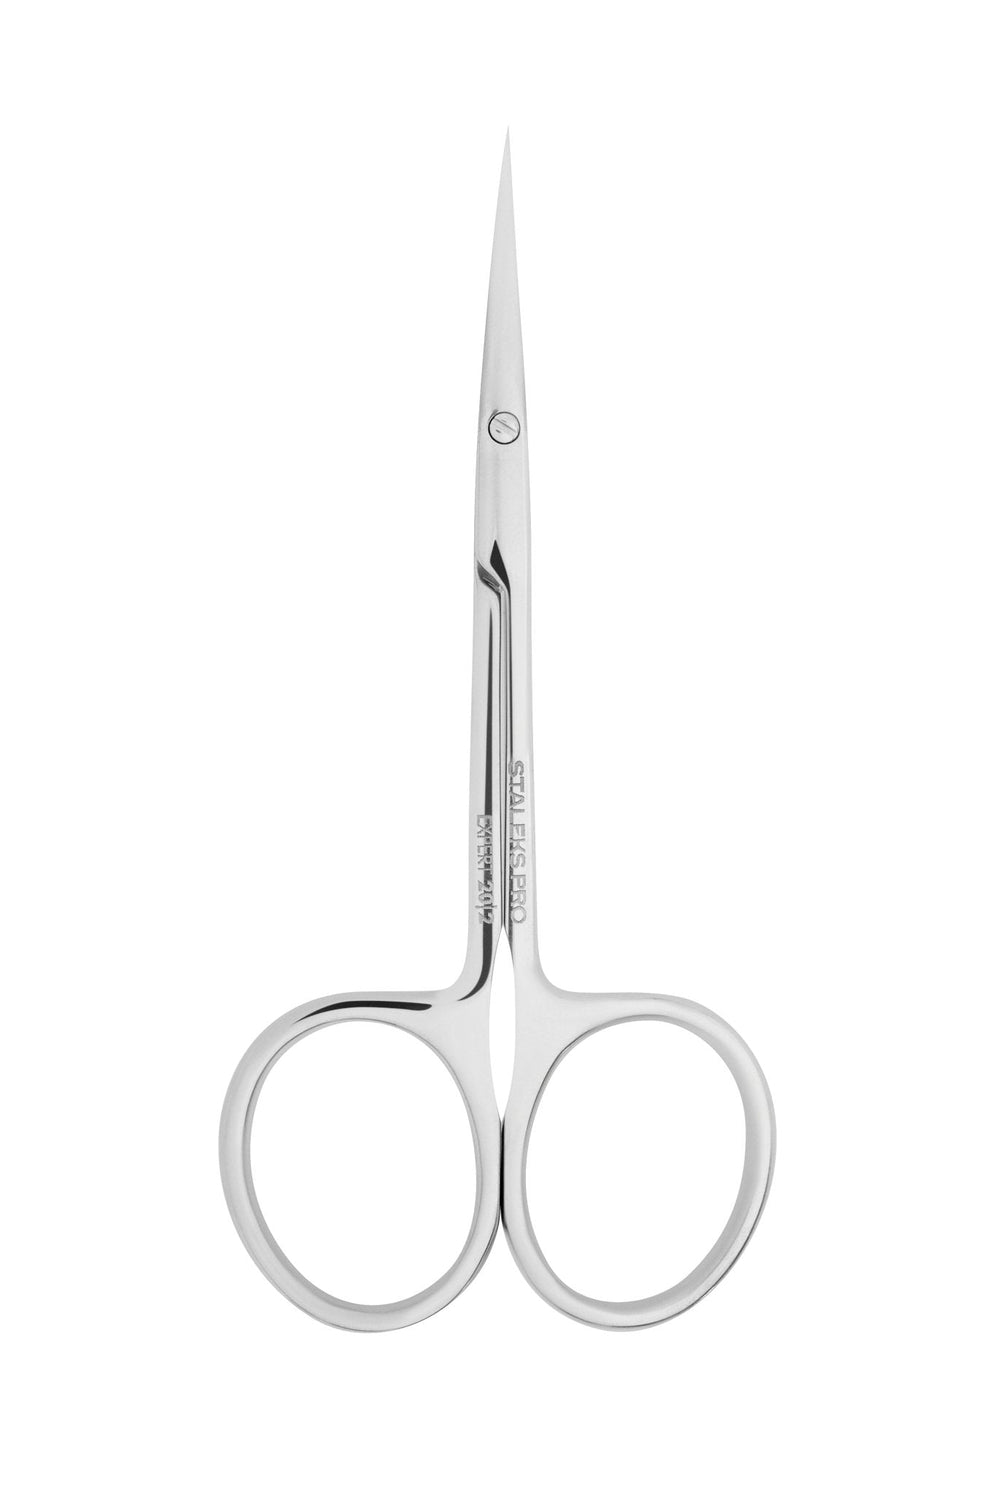 Staleks Pro Cuticle Scissors with Narrow Curved Blades Expert 20 Type 2 — 24 mm blades | U-tools